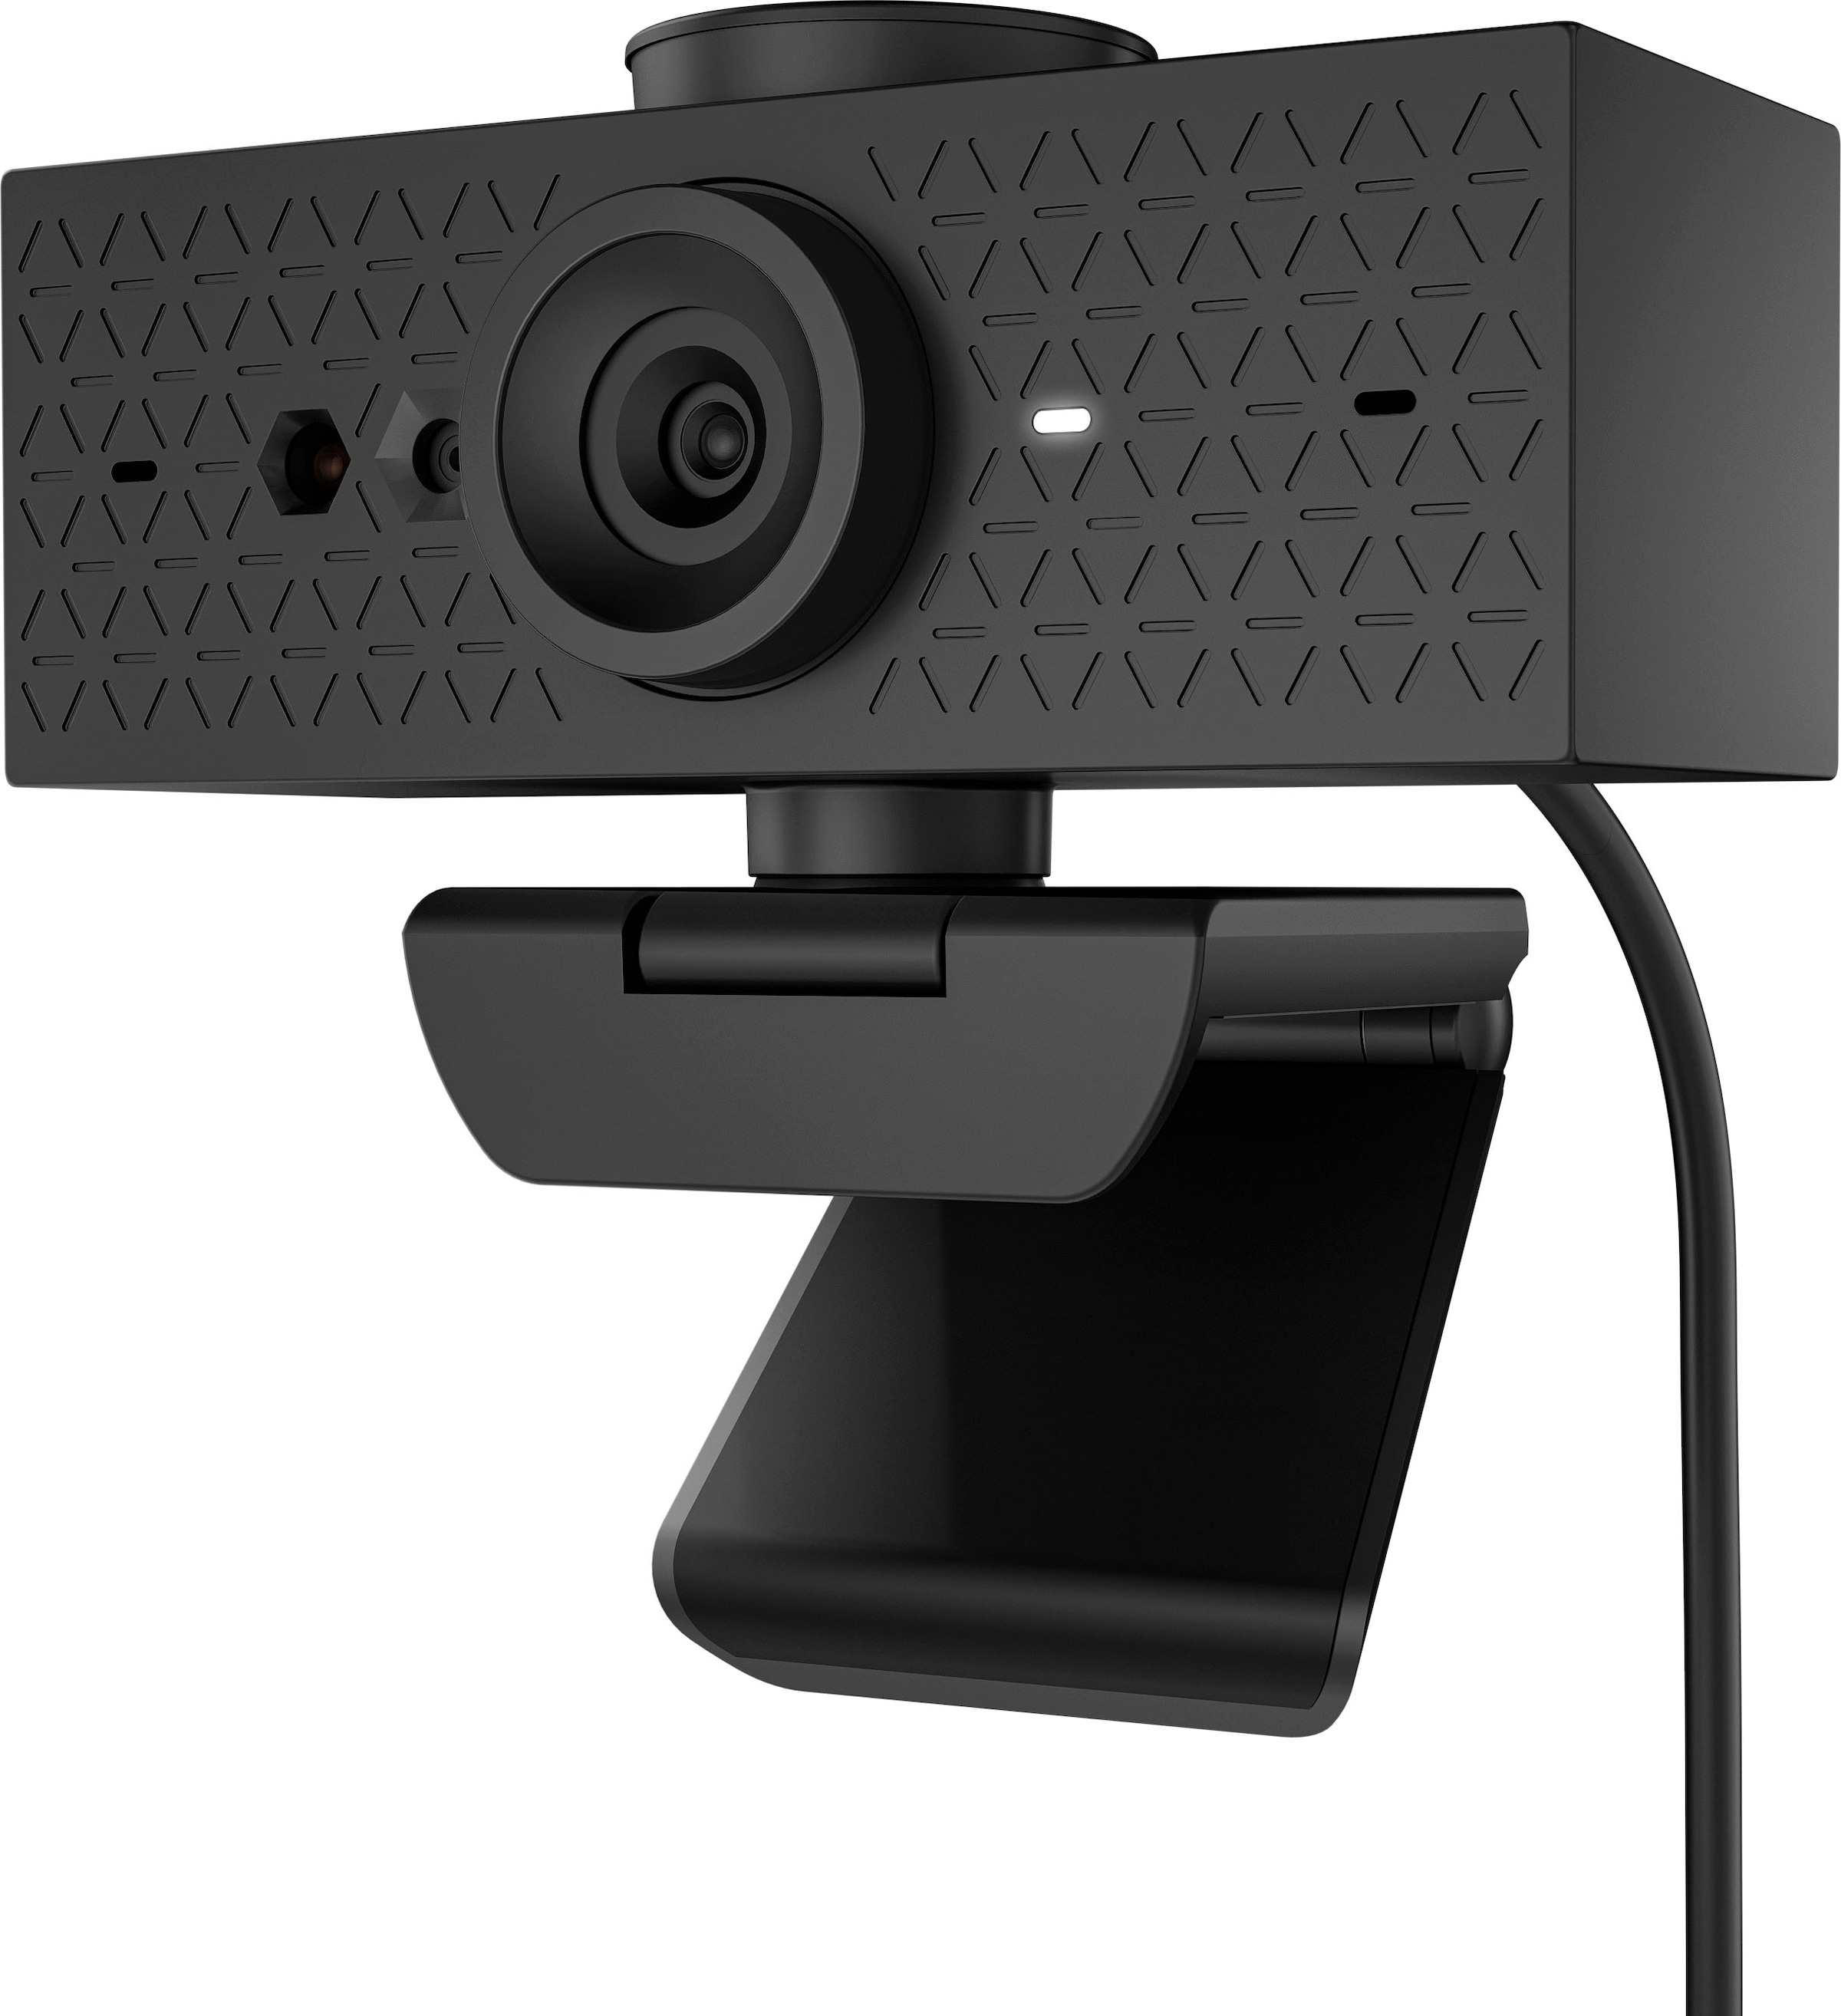 Webcam »620 FHD«, Full HD, 5 fachx opt. Zoom